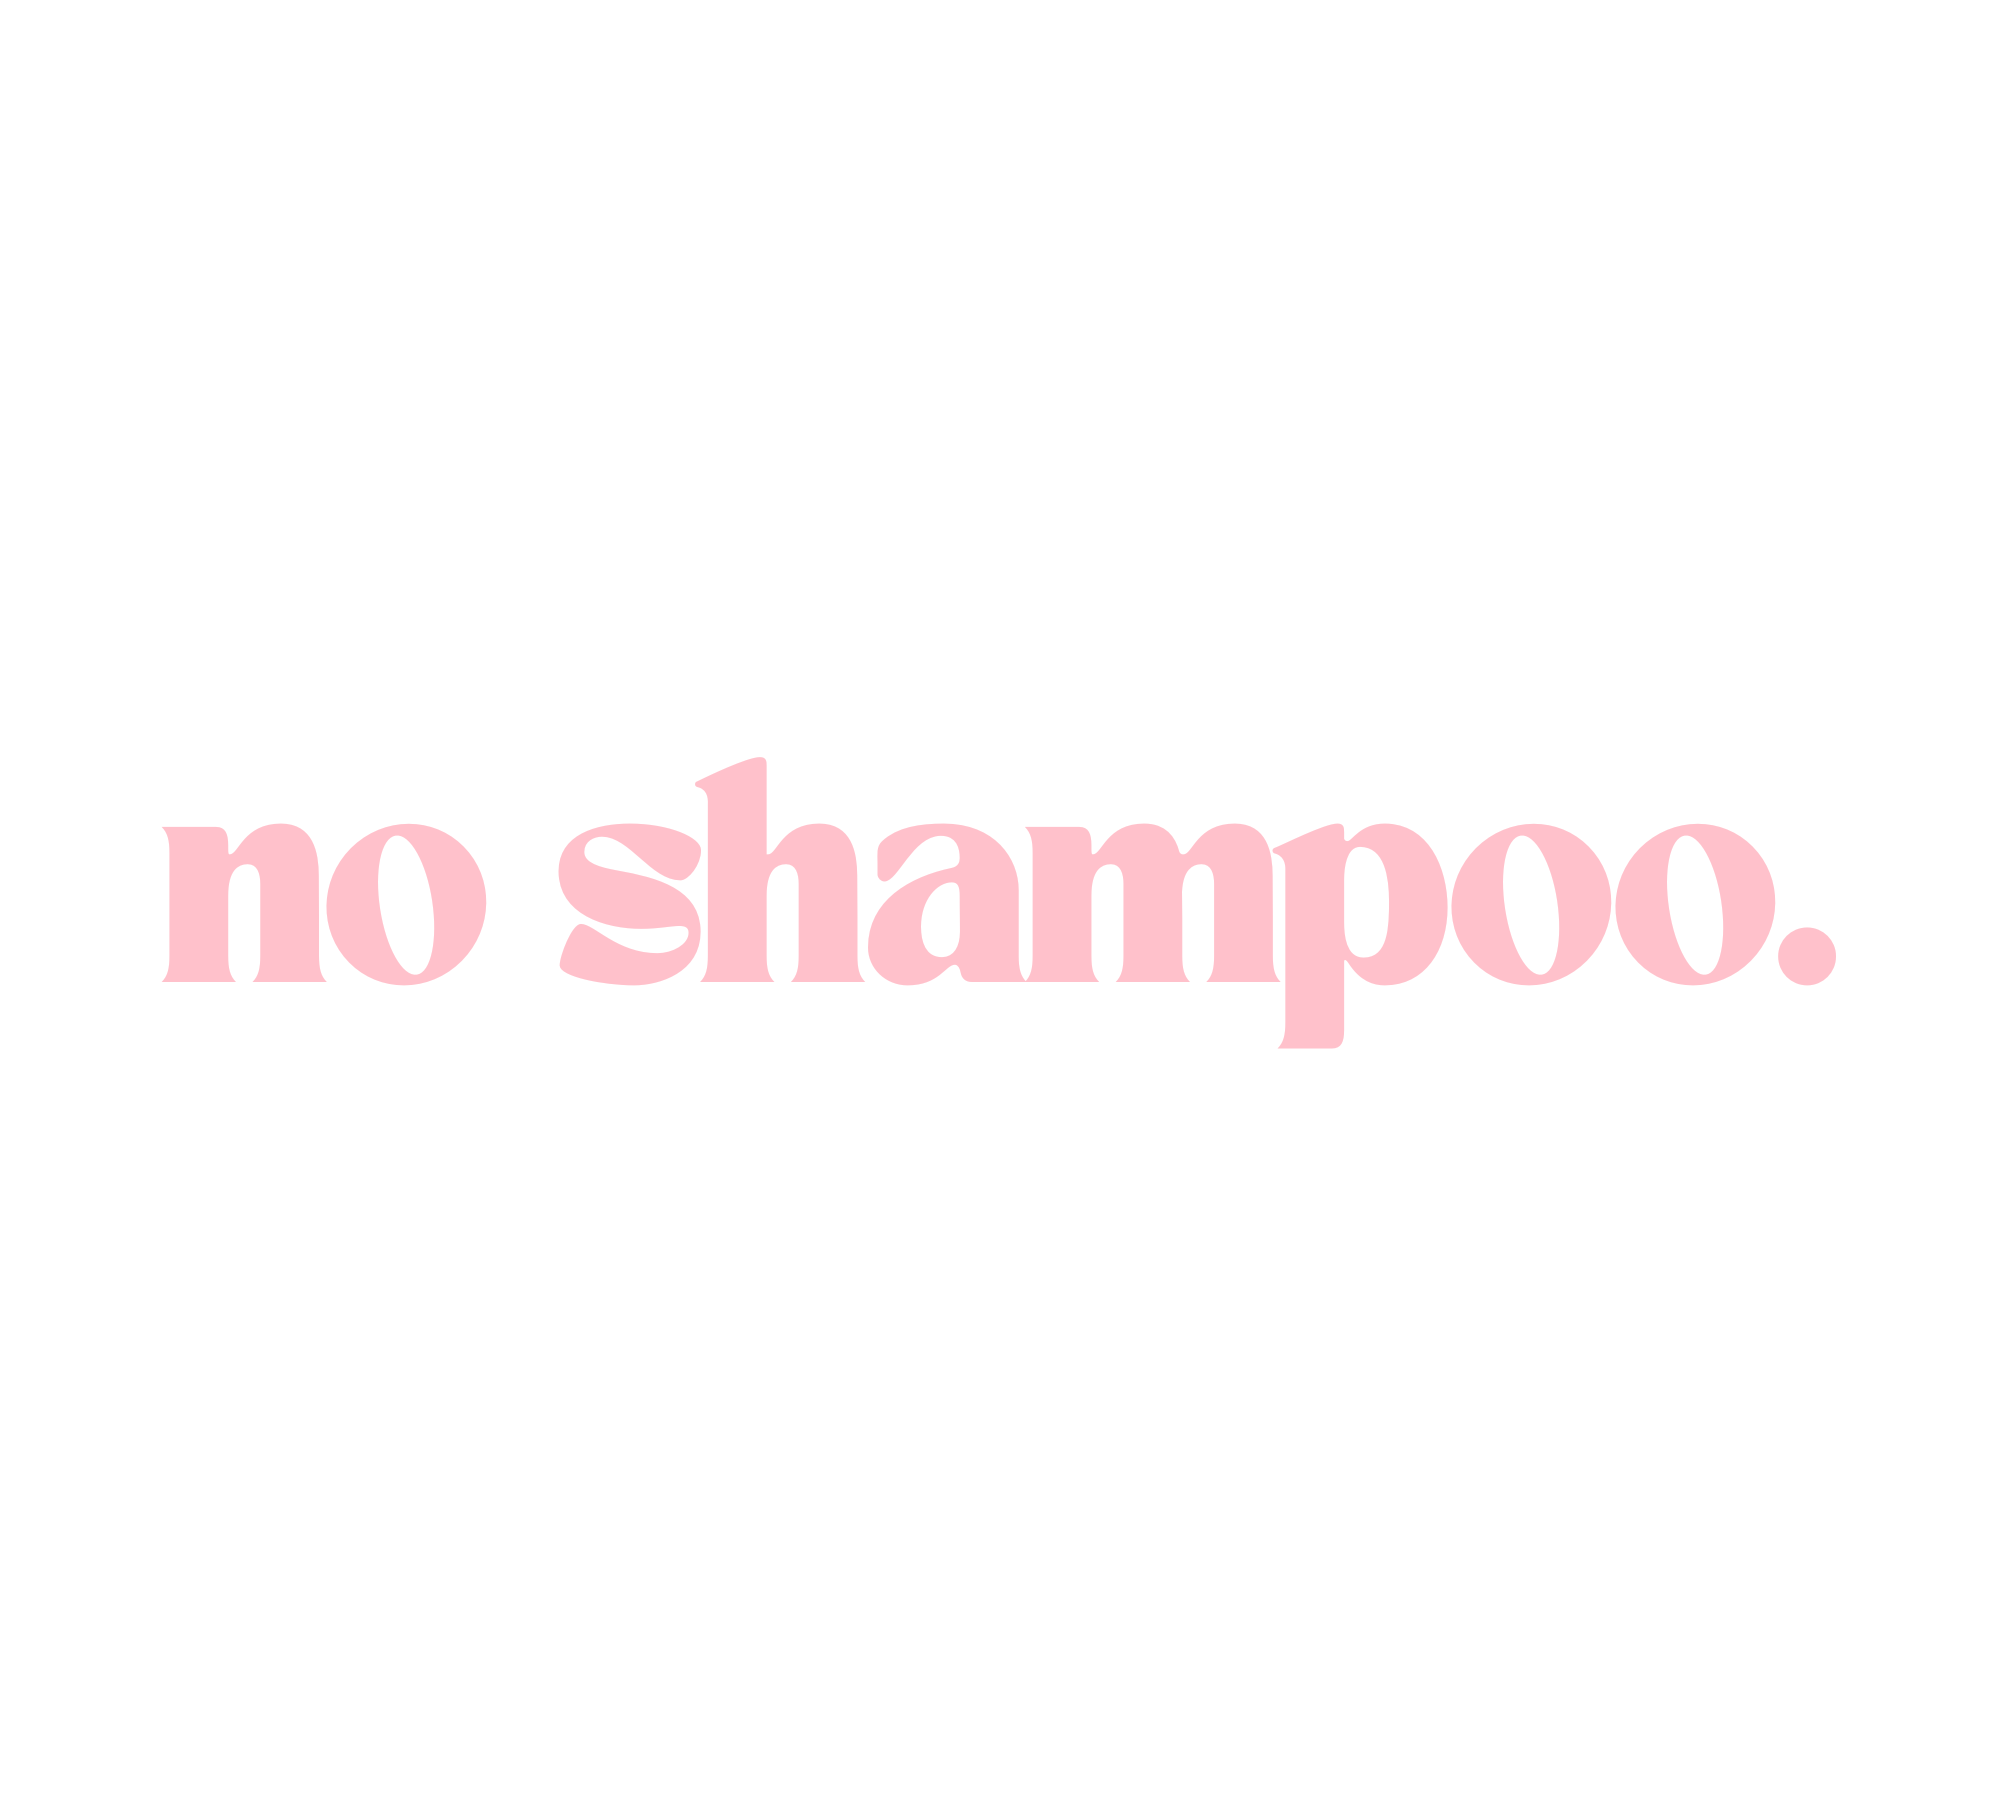 No Shampoo